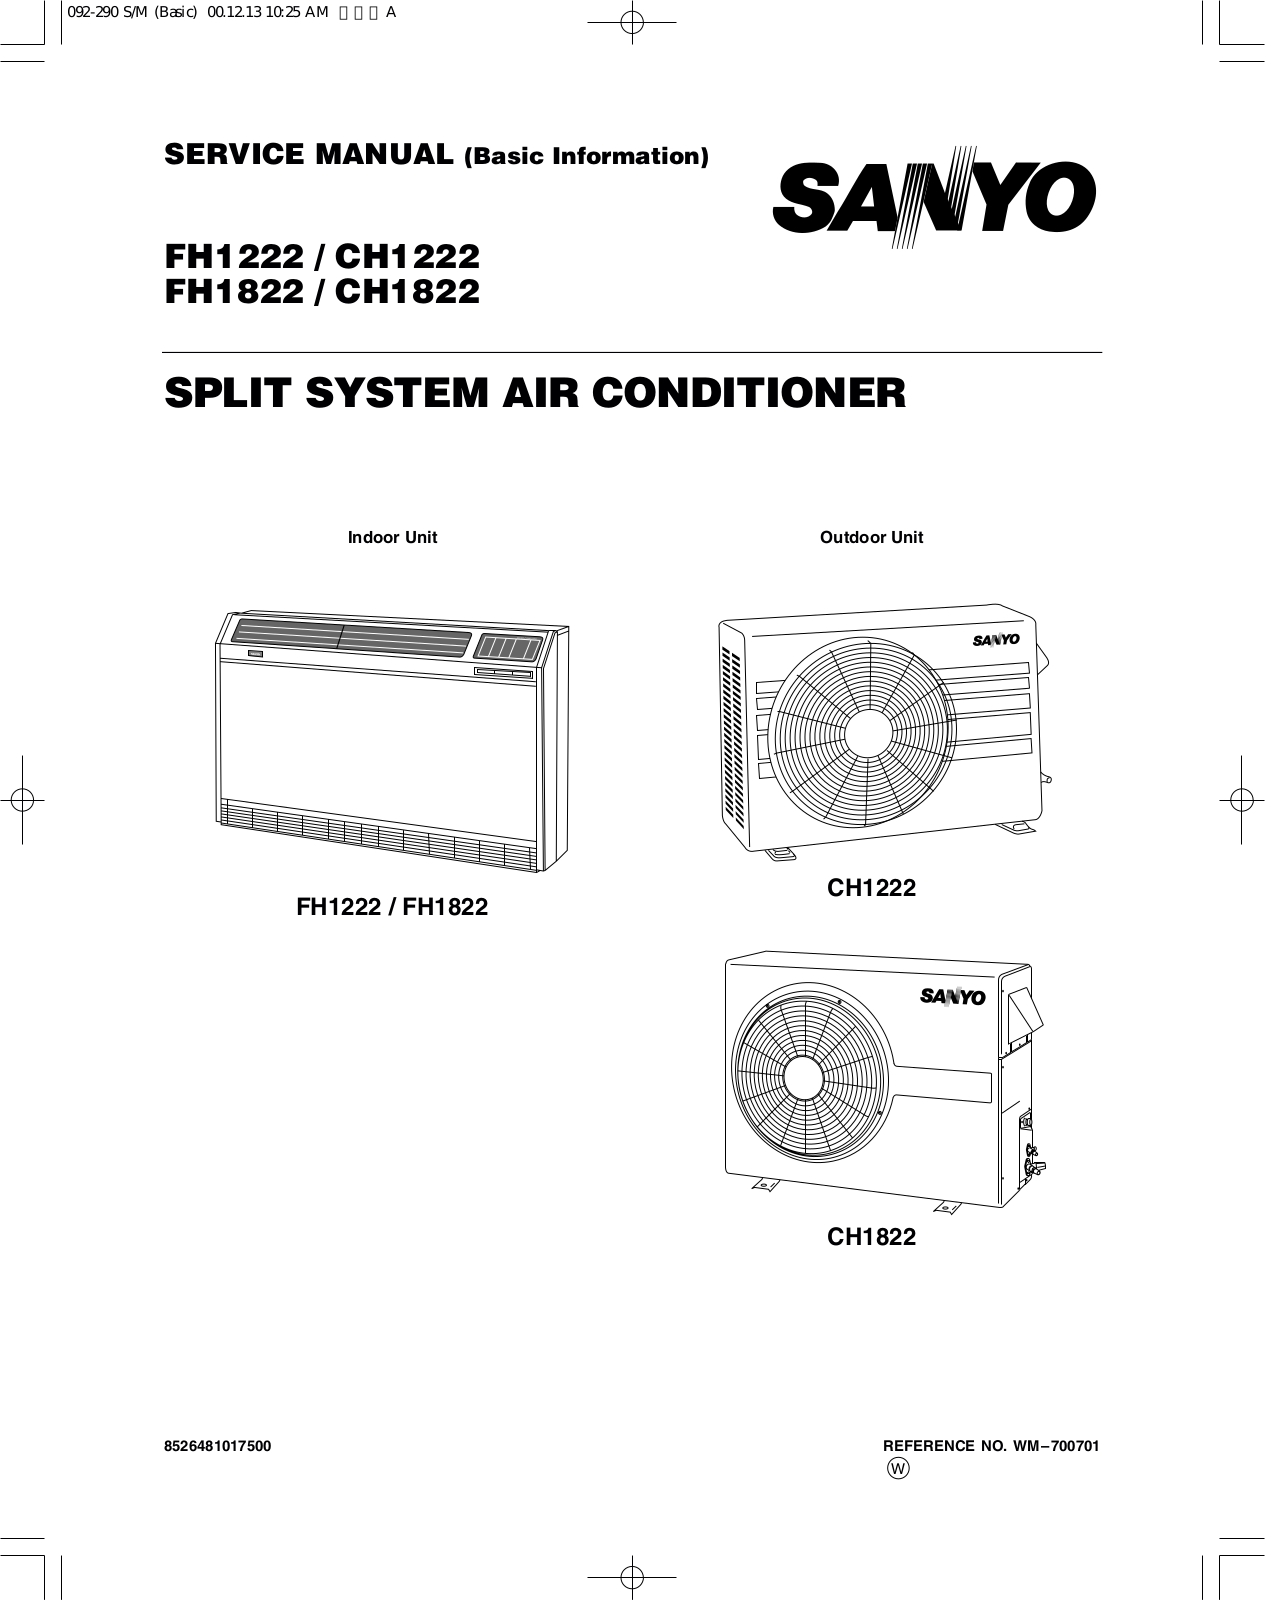 Sanyo CH1822, FH1822, CH1222, FH1222 Service Manual